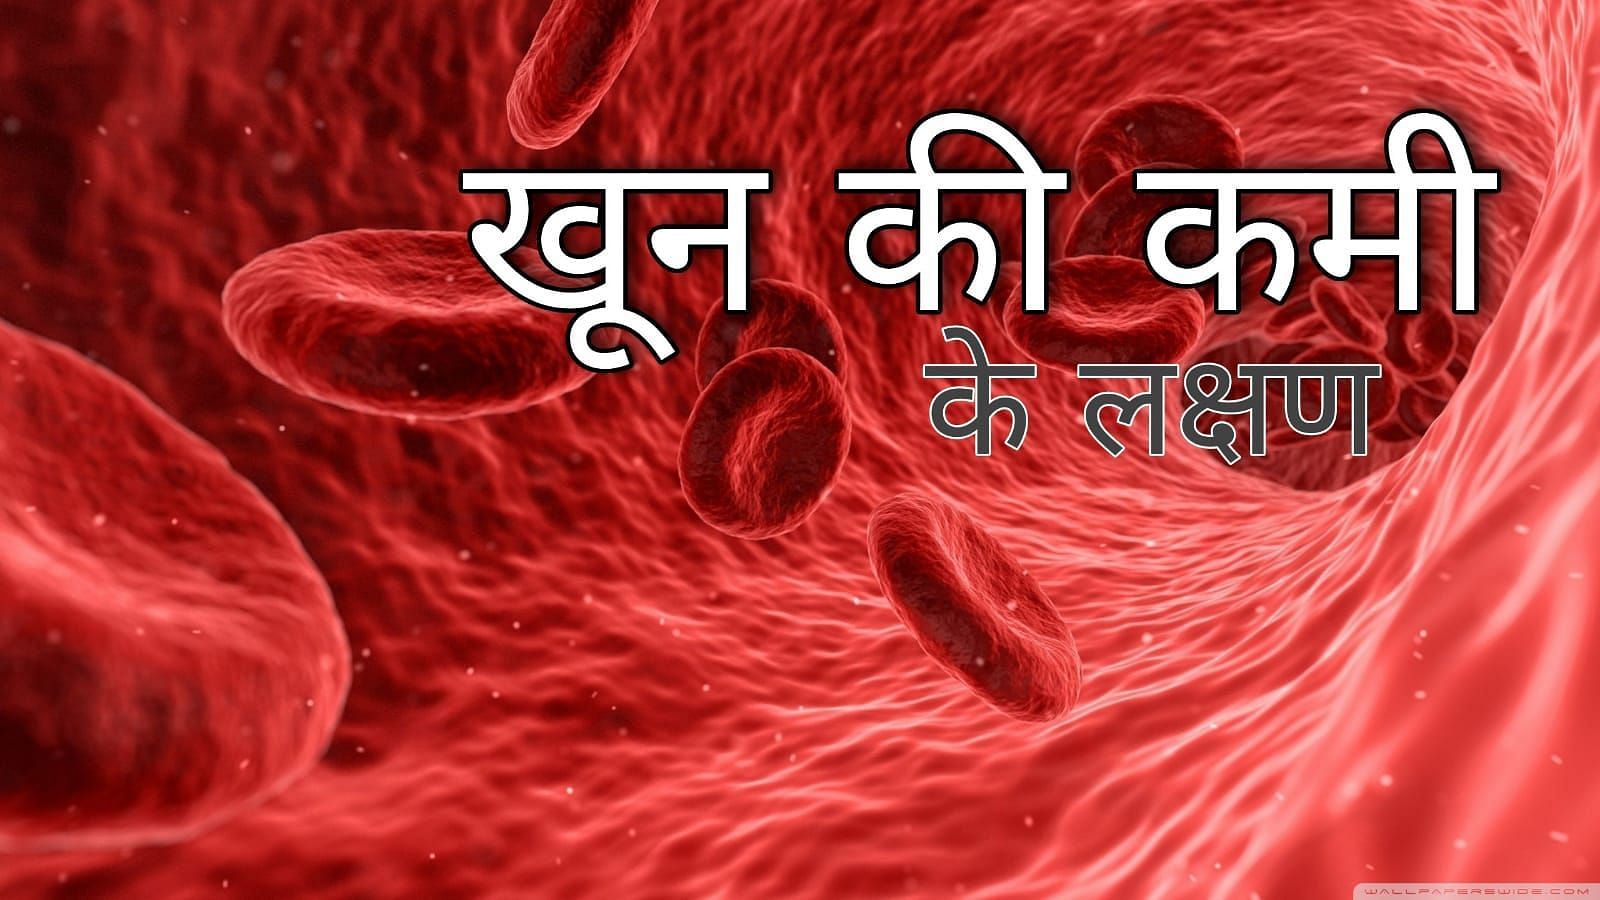 खून की कमी के लक्षण (source - google images)